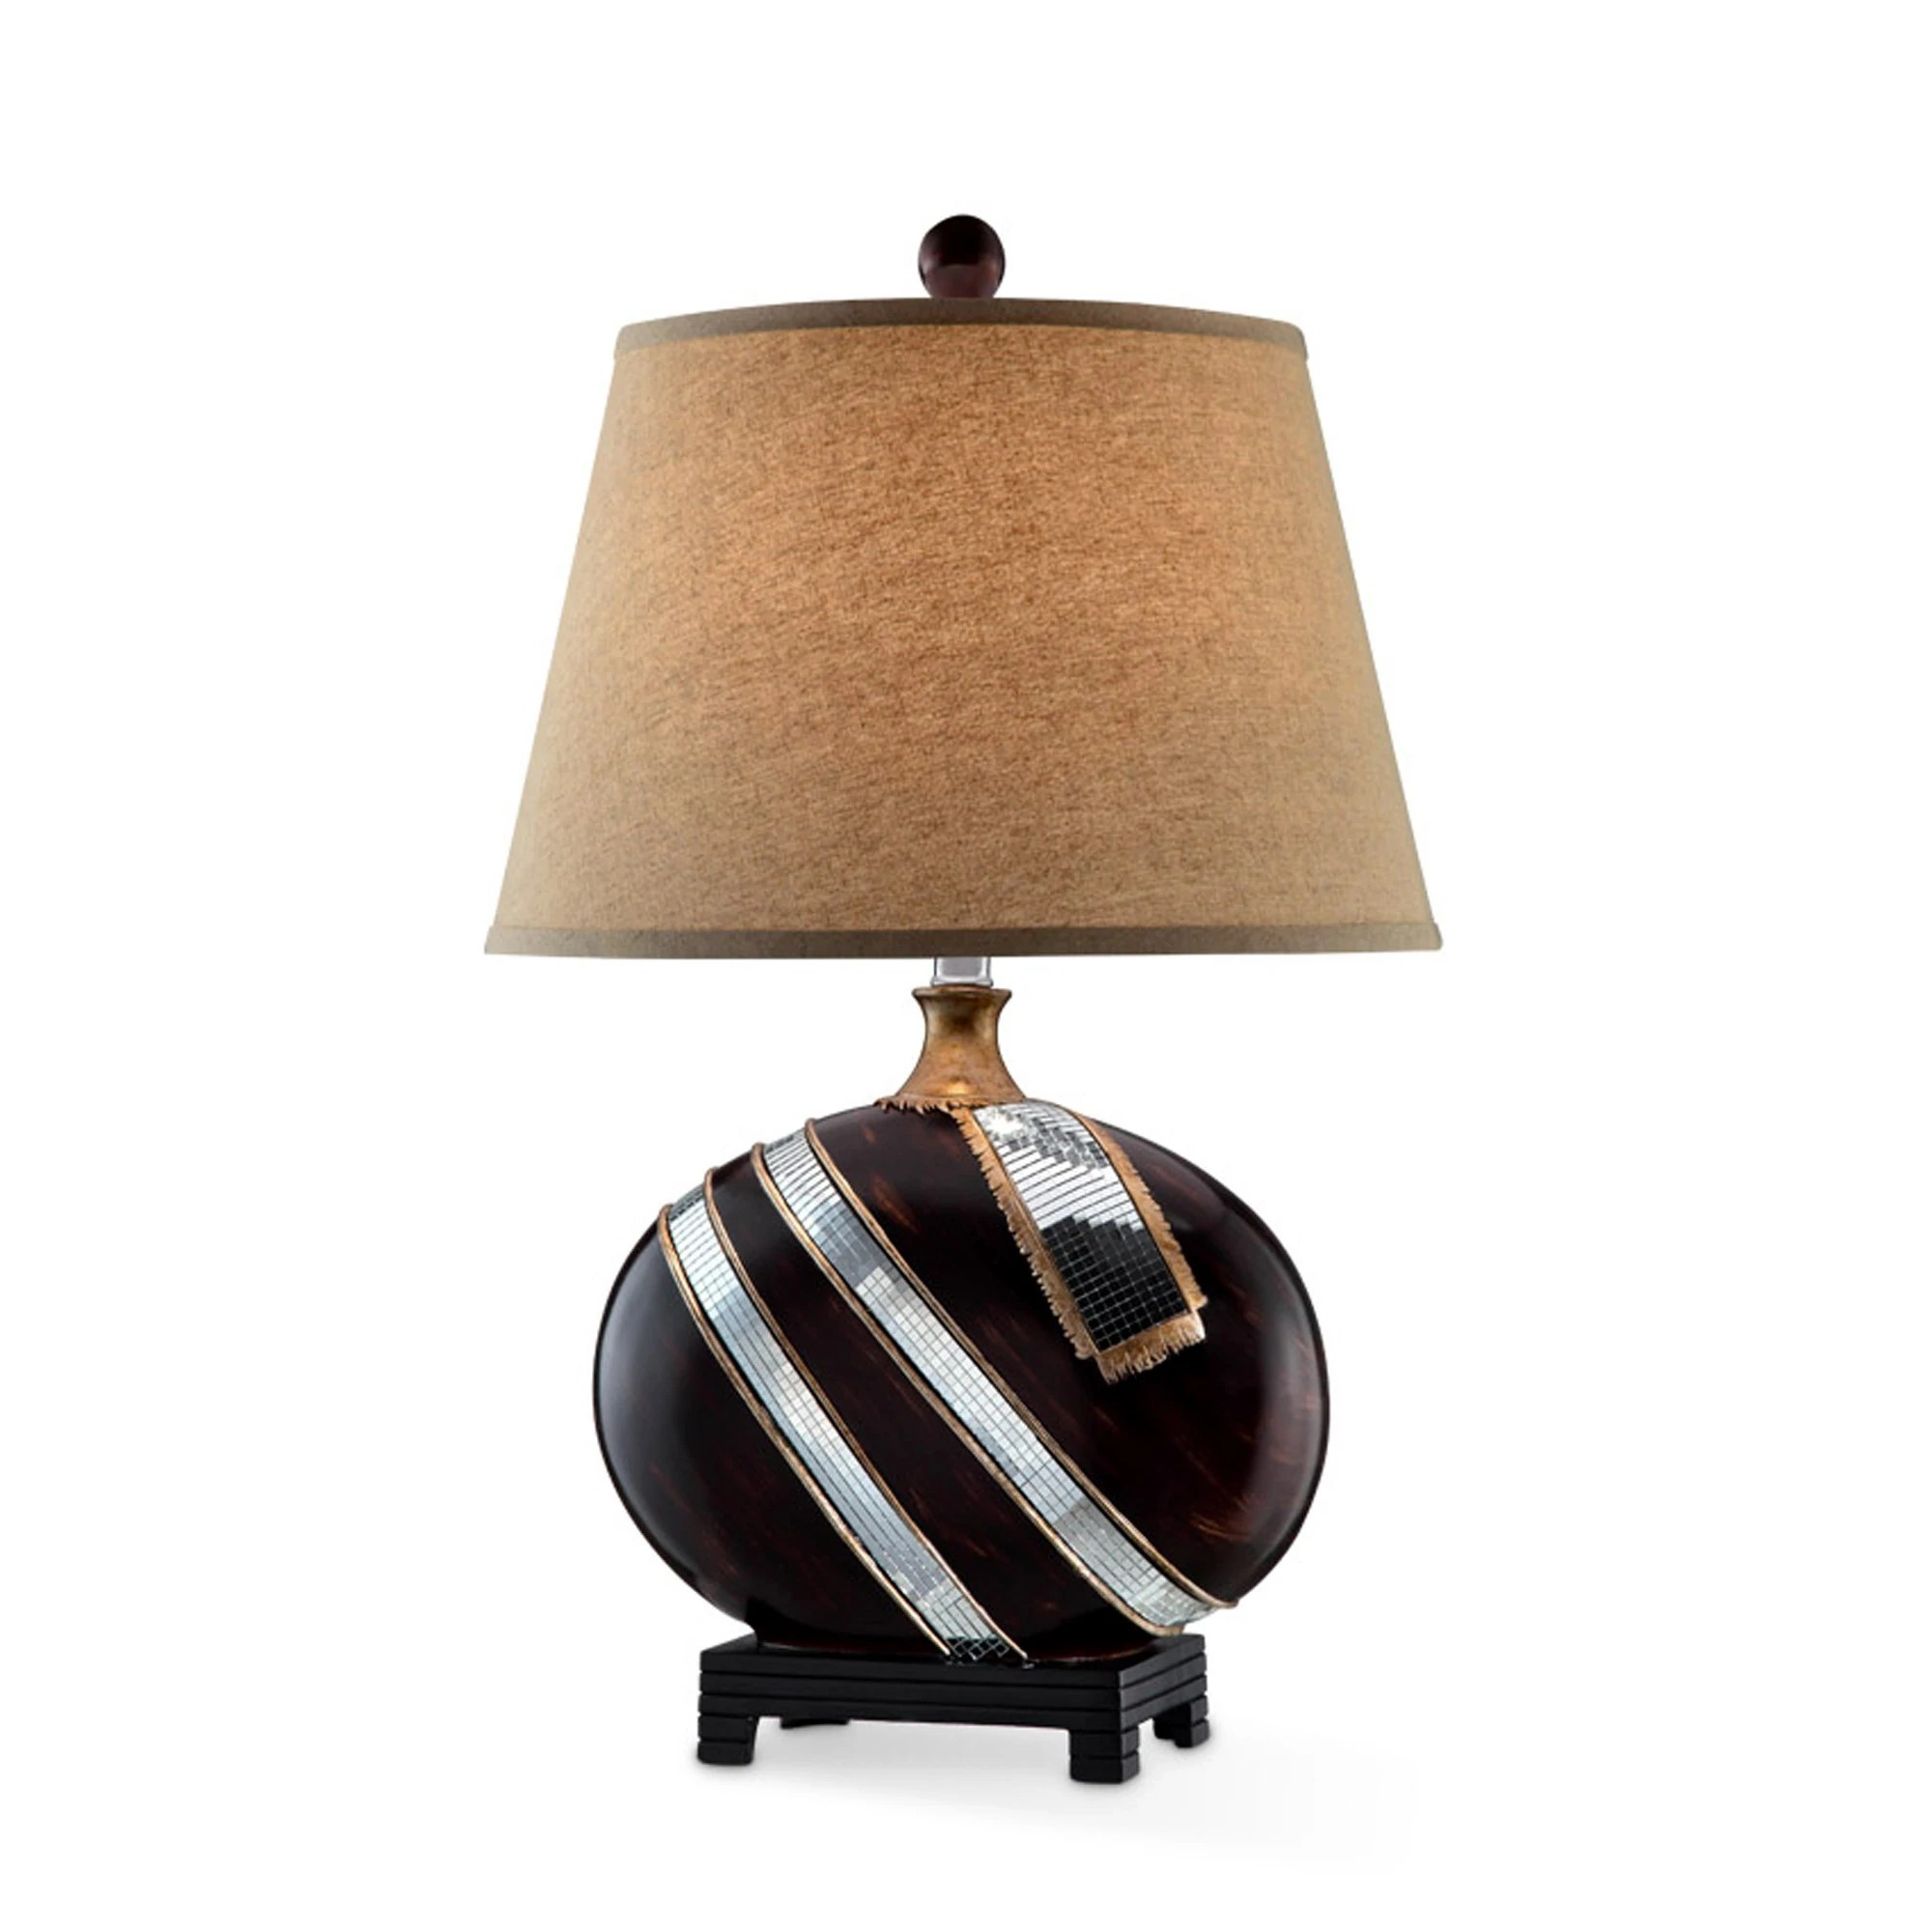 HomeRoots 468677 Dark Brown Polyresin Lamp with Beige Fabric Shade, Dark Espresso - image 2 of 4